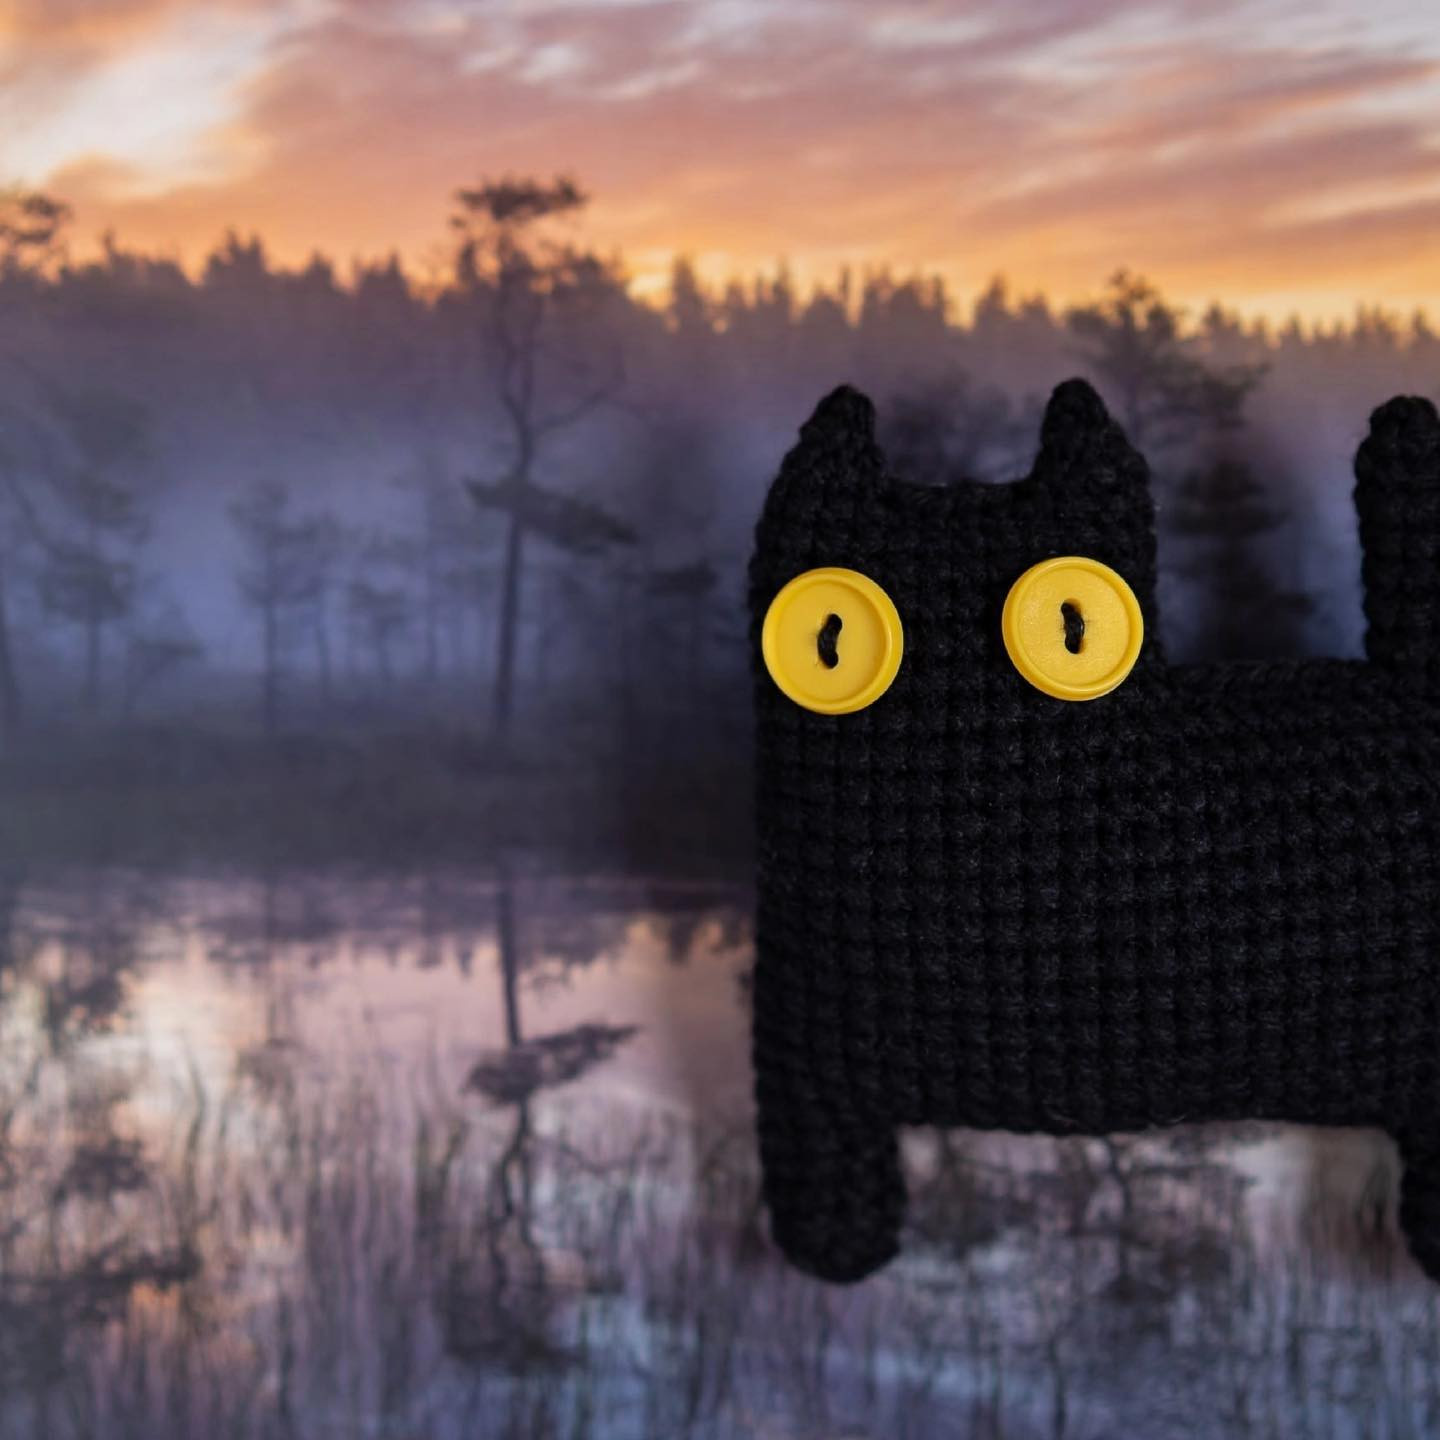 free crochet pattern black cat with yellow eyes.